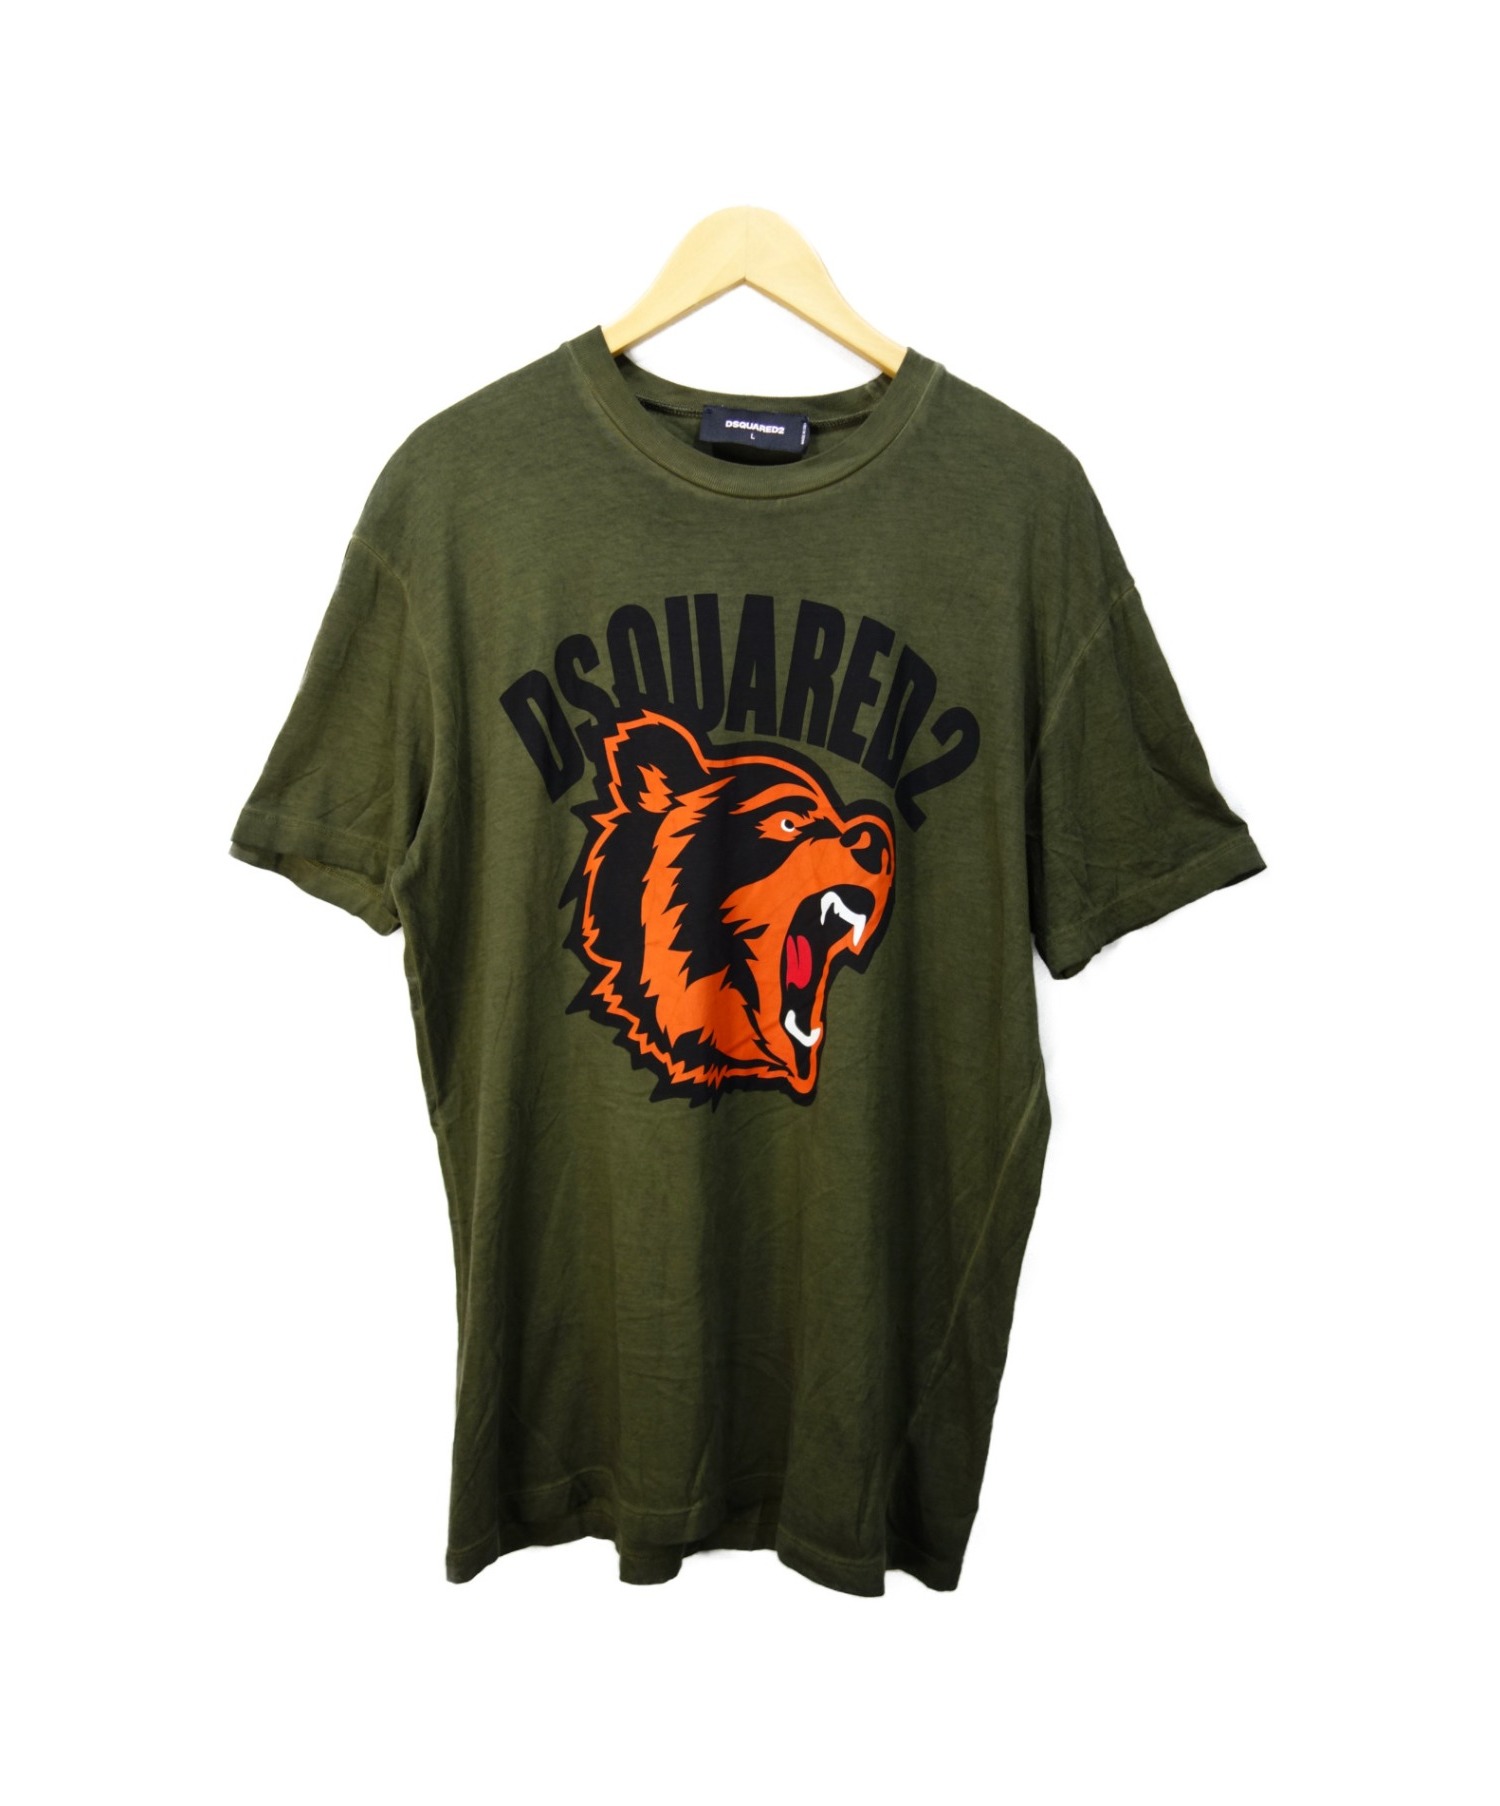 DSQUARED2 (ディースクエアード) タイガープリントTシャツ オリーブ サイズ:L S74GD0584 S21600